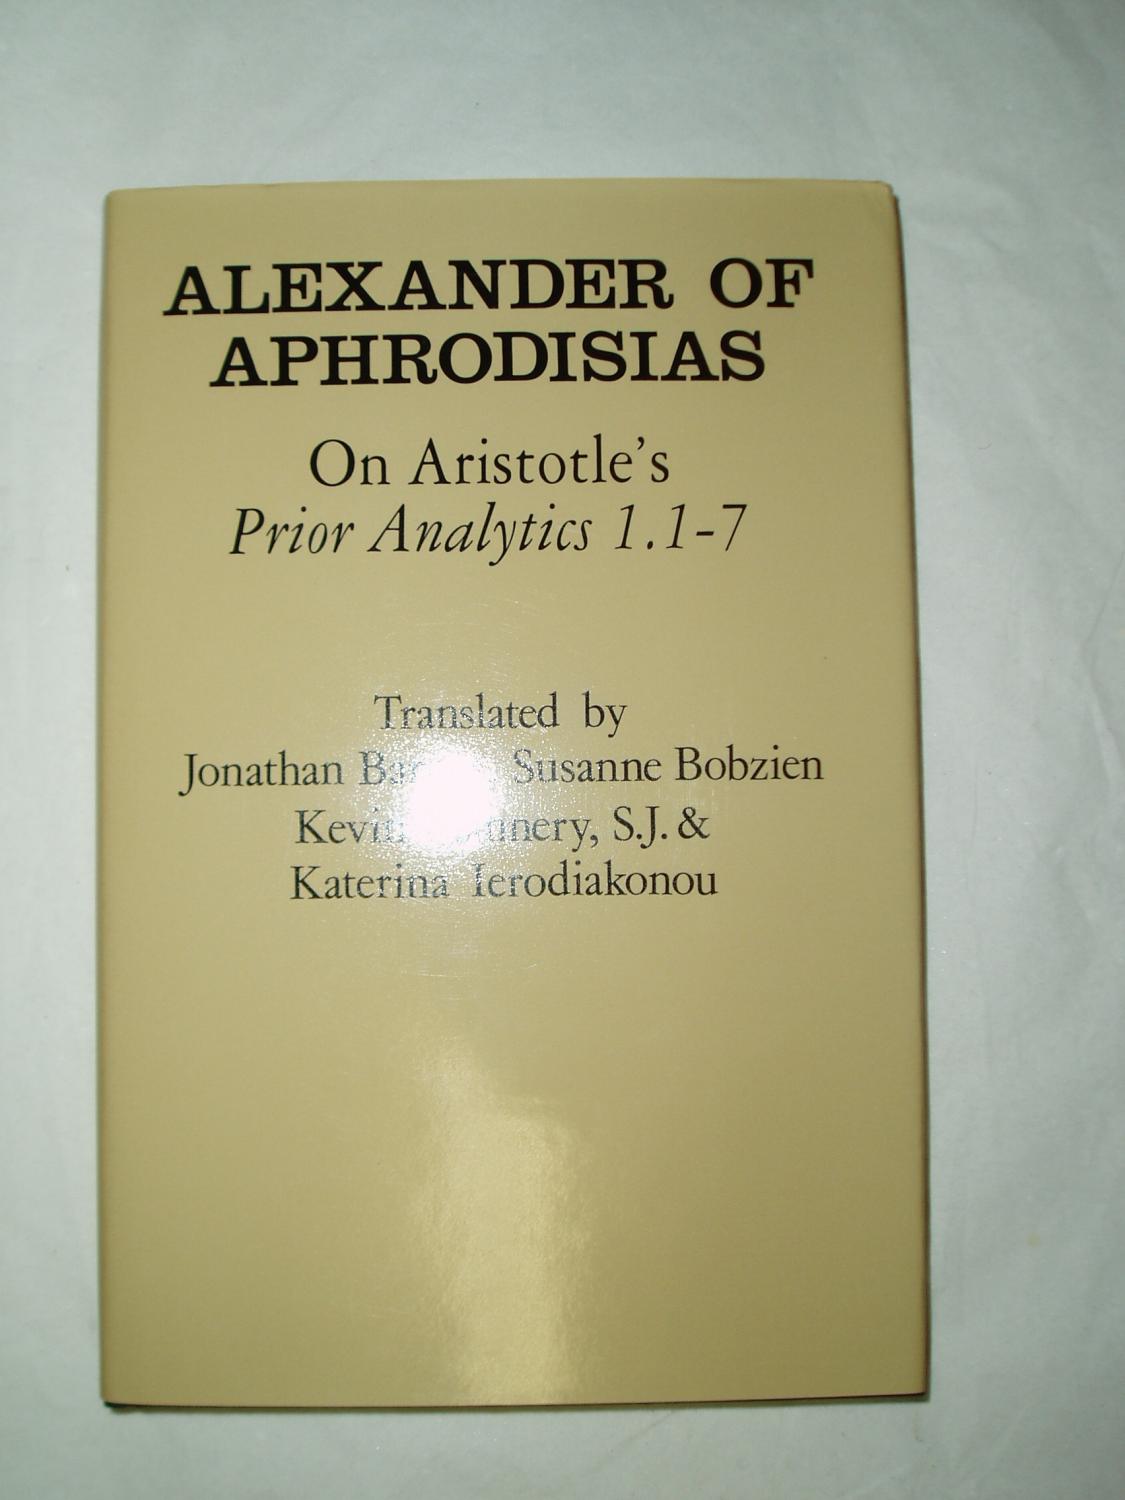 On Aristotle's Prior Analytics 1.1-7 - Alexander, of Aphrodisias [ Barnes, Jonathan ; Bobzien, Susanne ; Flannery, Kevin; & Ierodiakonou, S.J. & Naterina; translators